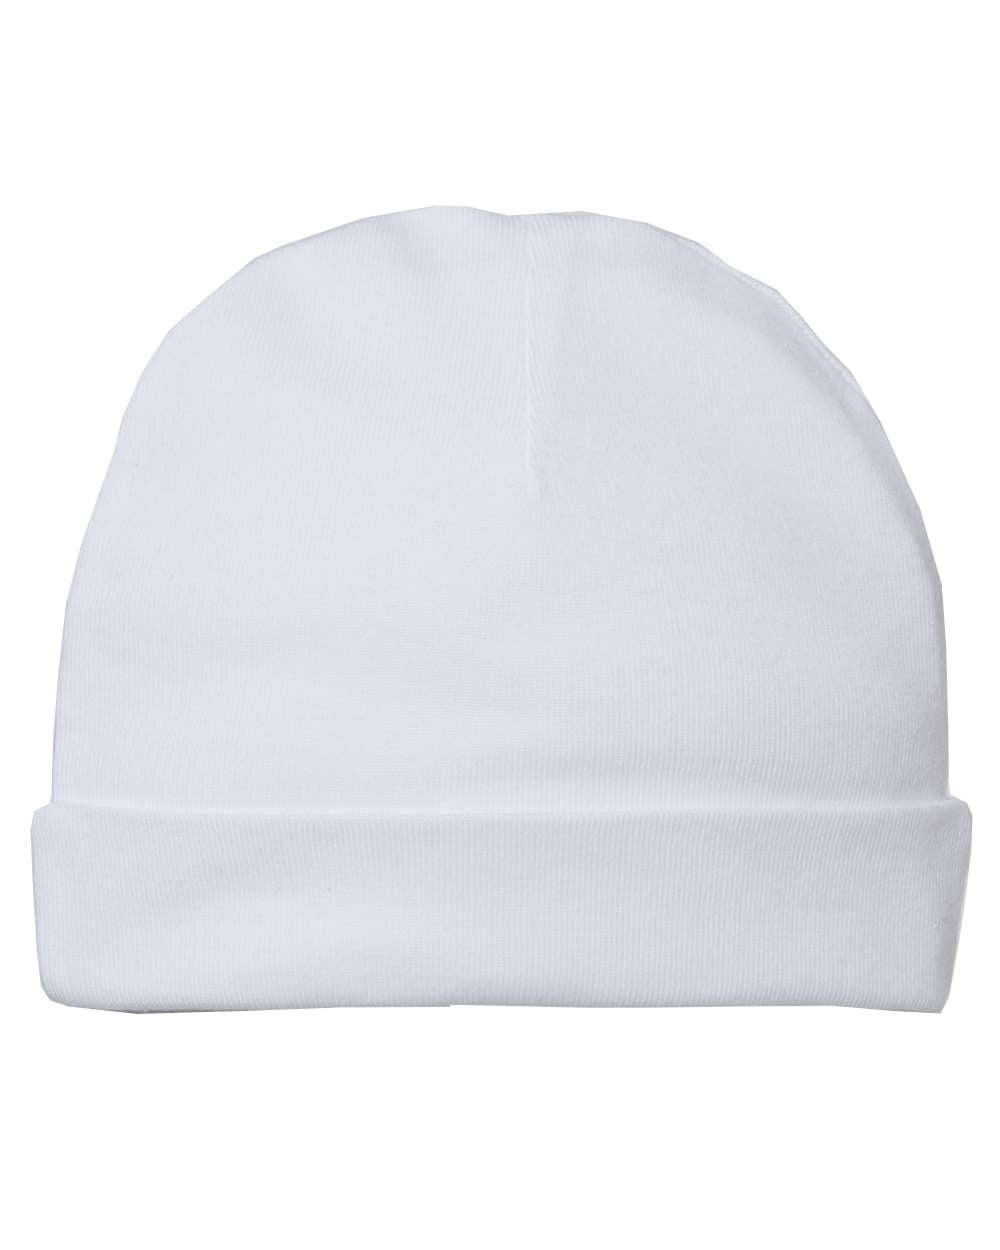 1 White & 1 White and Mint 3 x Medium Premature Baby Hats 1 Mint 